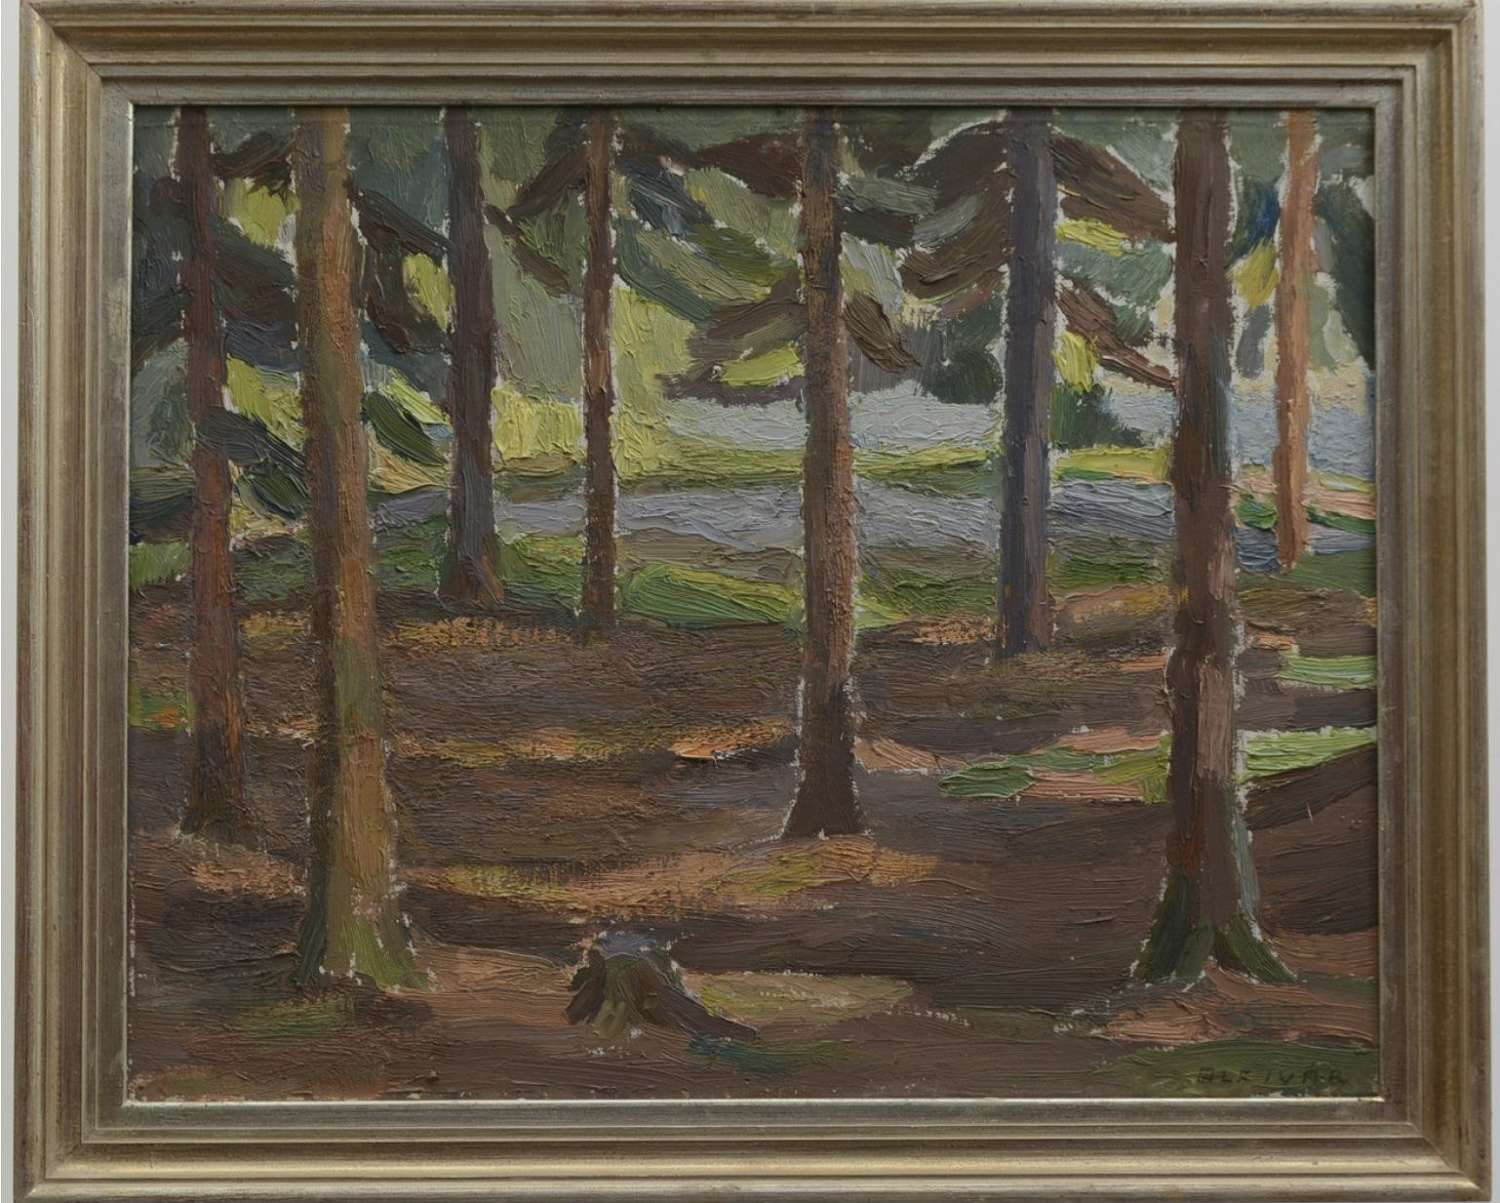 Mid 20th century Swedish forest scene oil on canvas